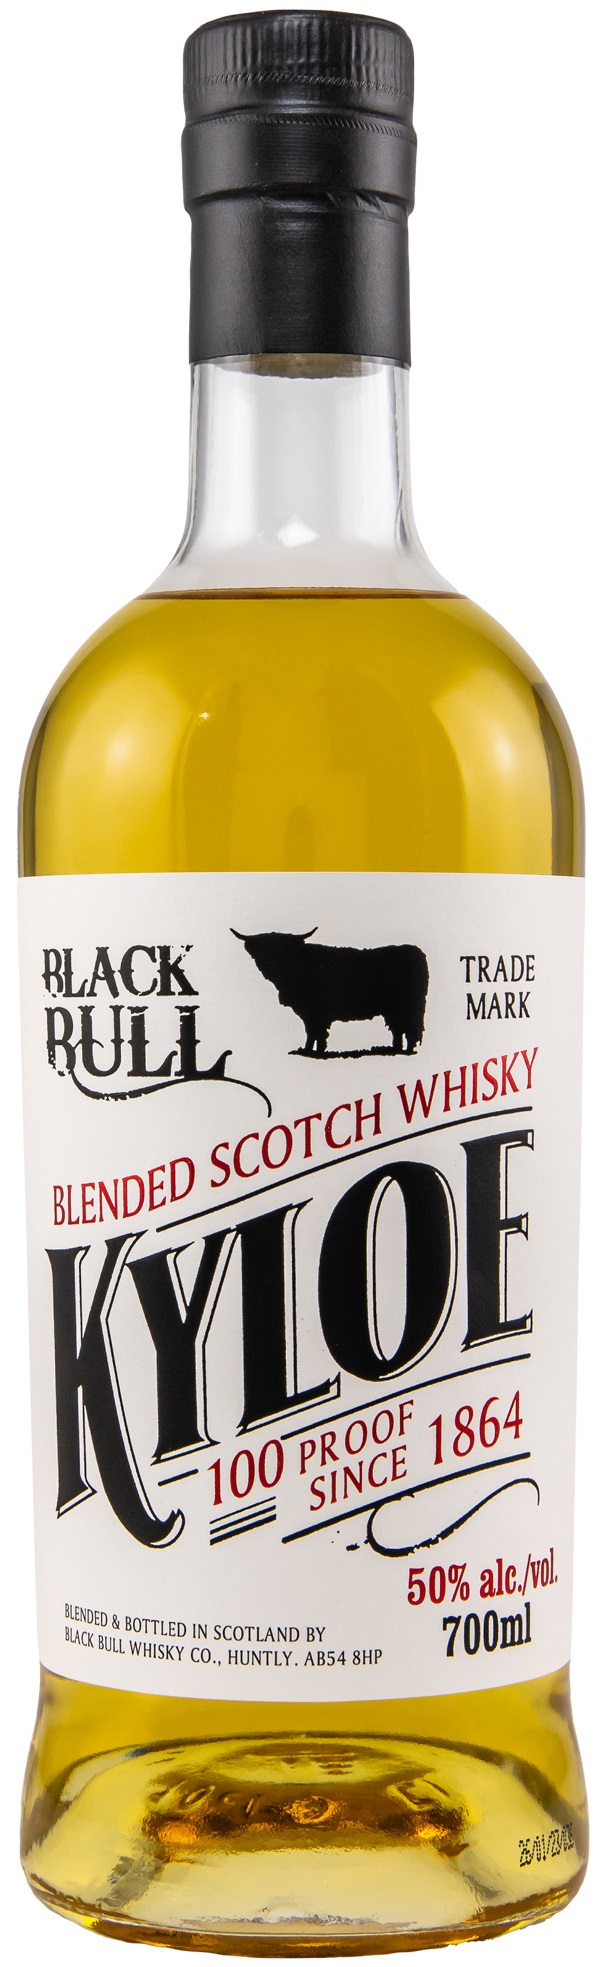 Black Bull Kyloe 50.0% 0,7l